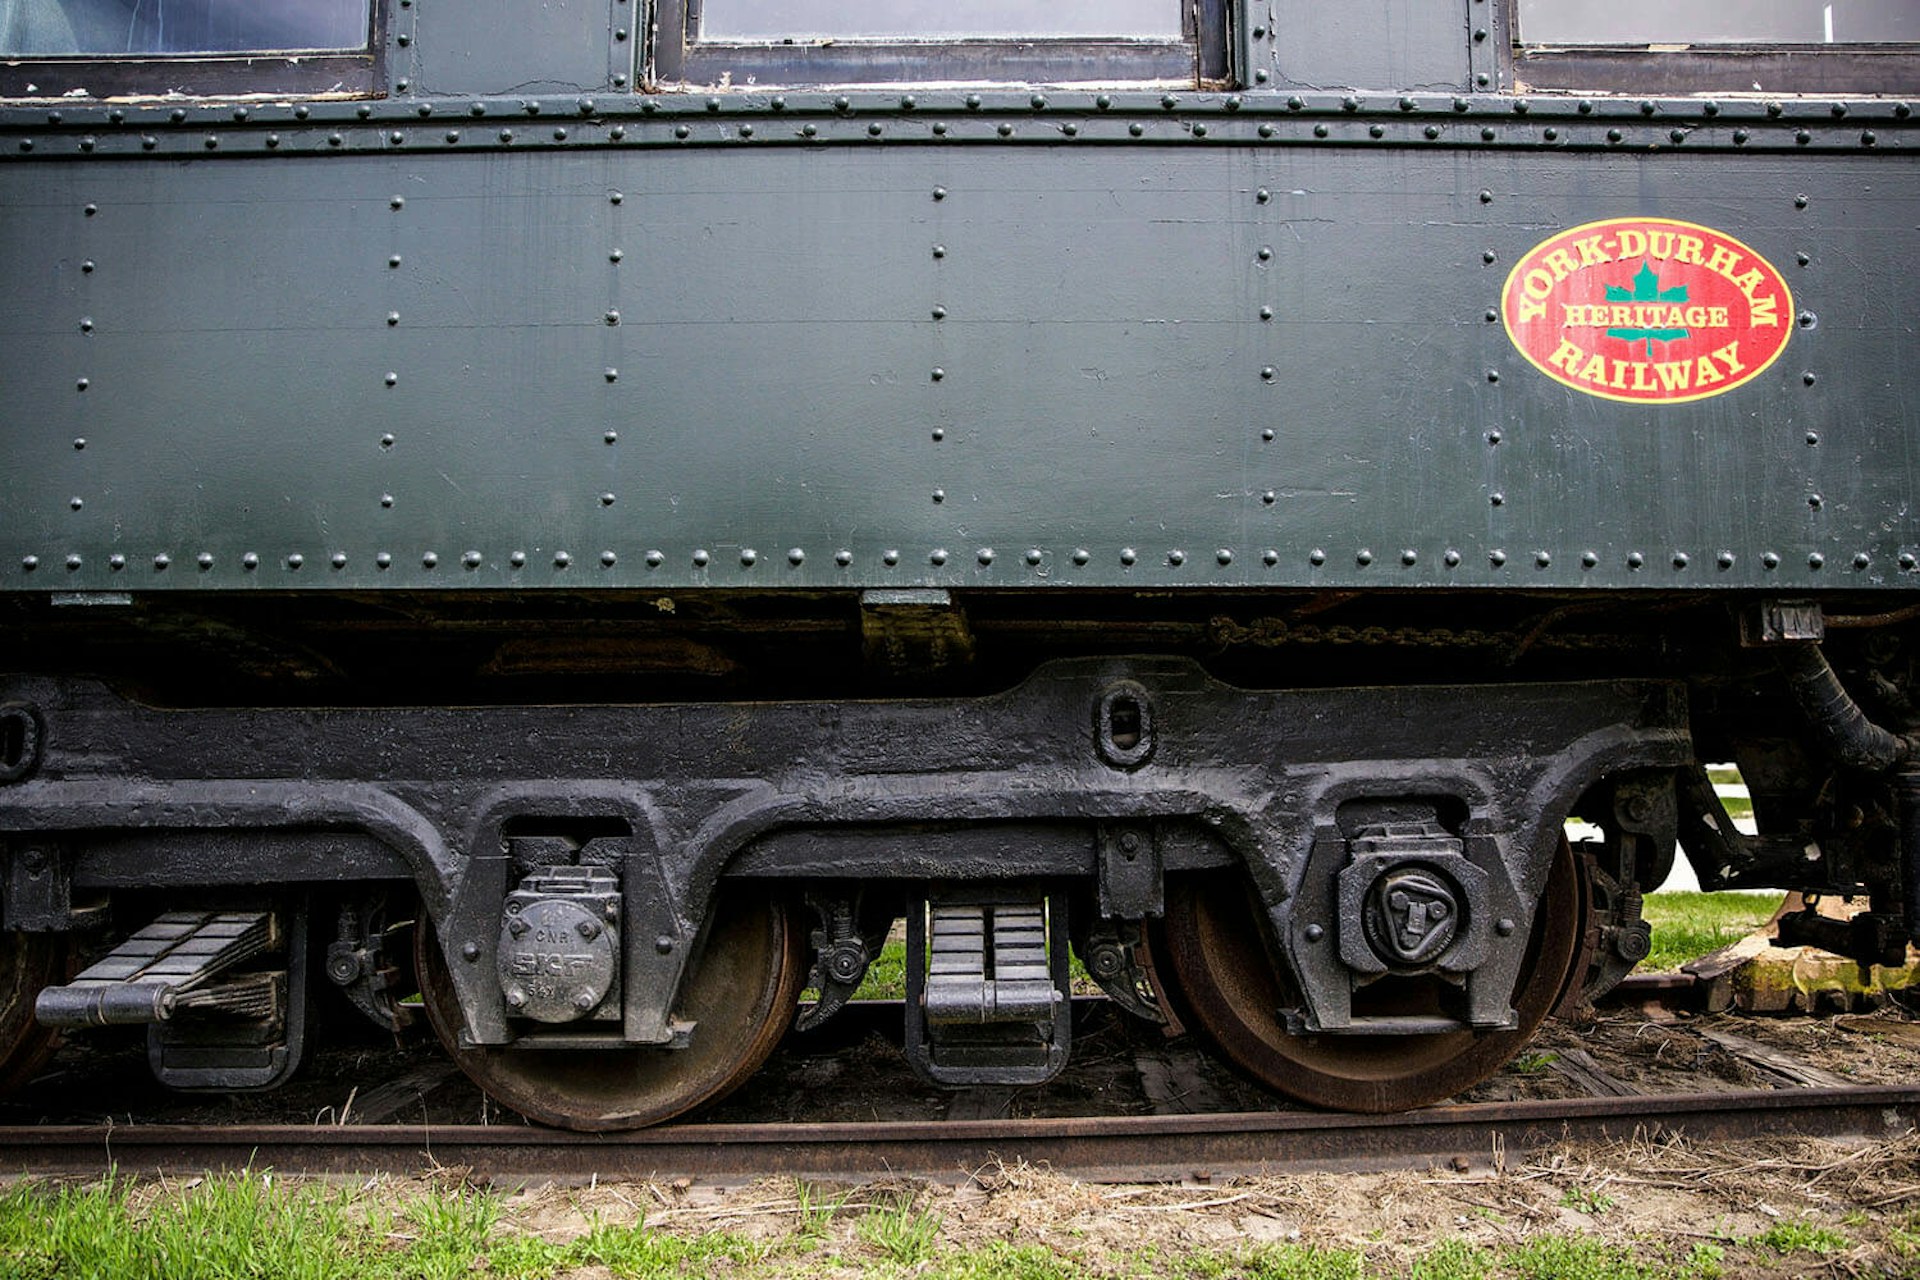 York Durham Heritage Railway